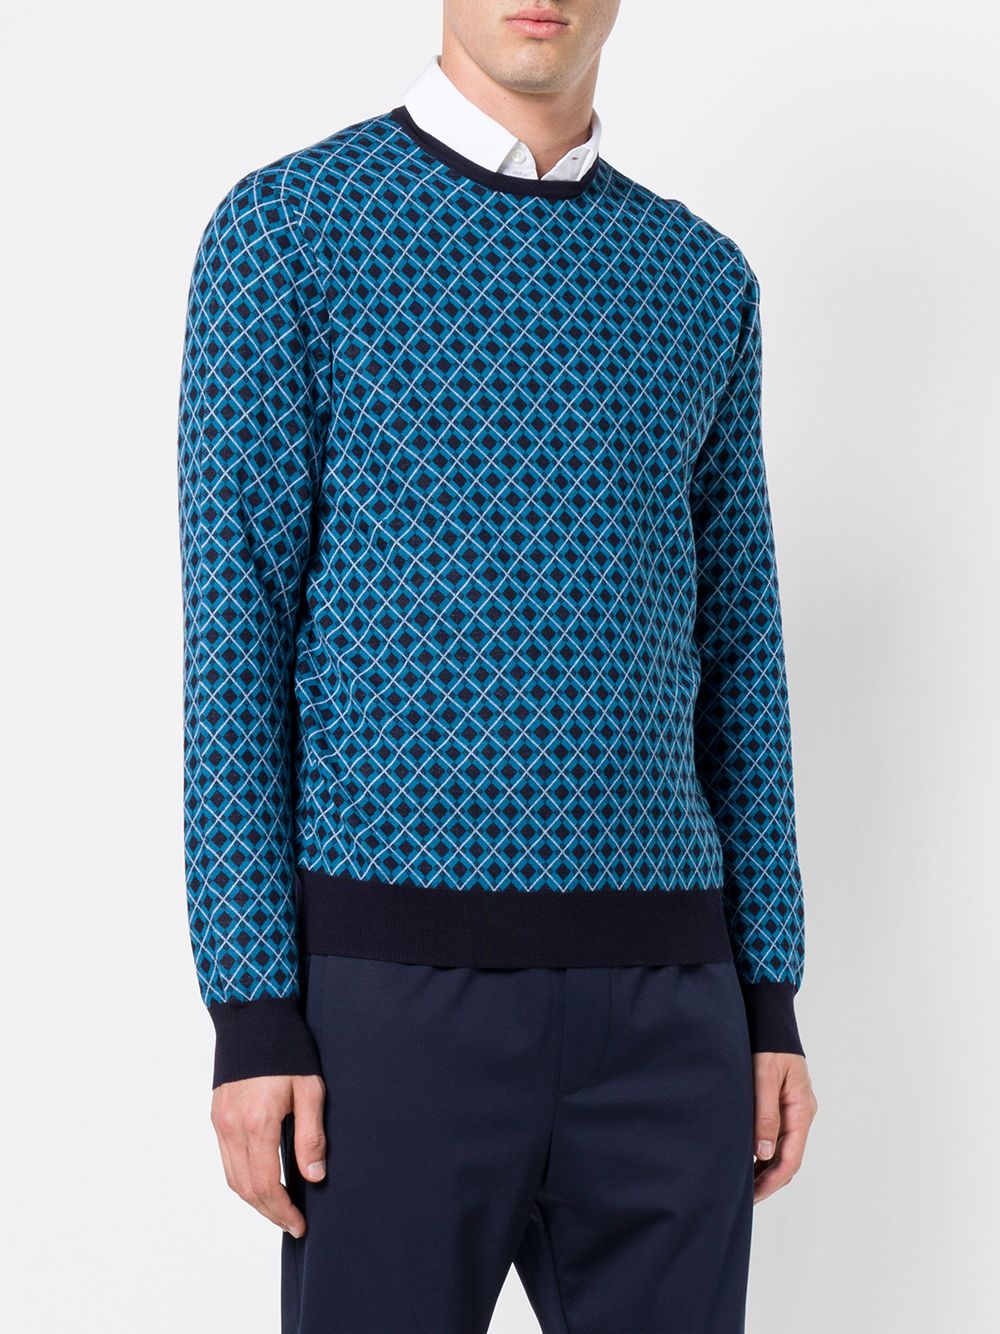 Prada geometric knit sweater $460 - Buy Online AW18 - Quick Shipping, Price